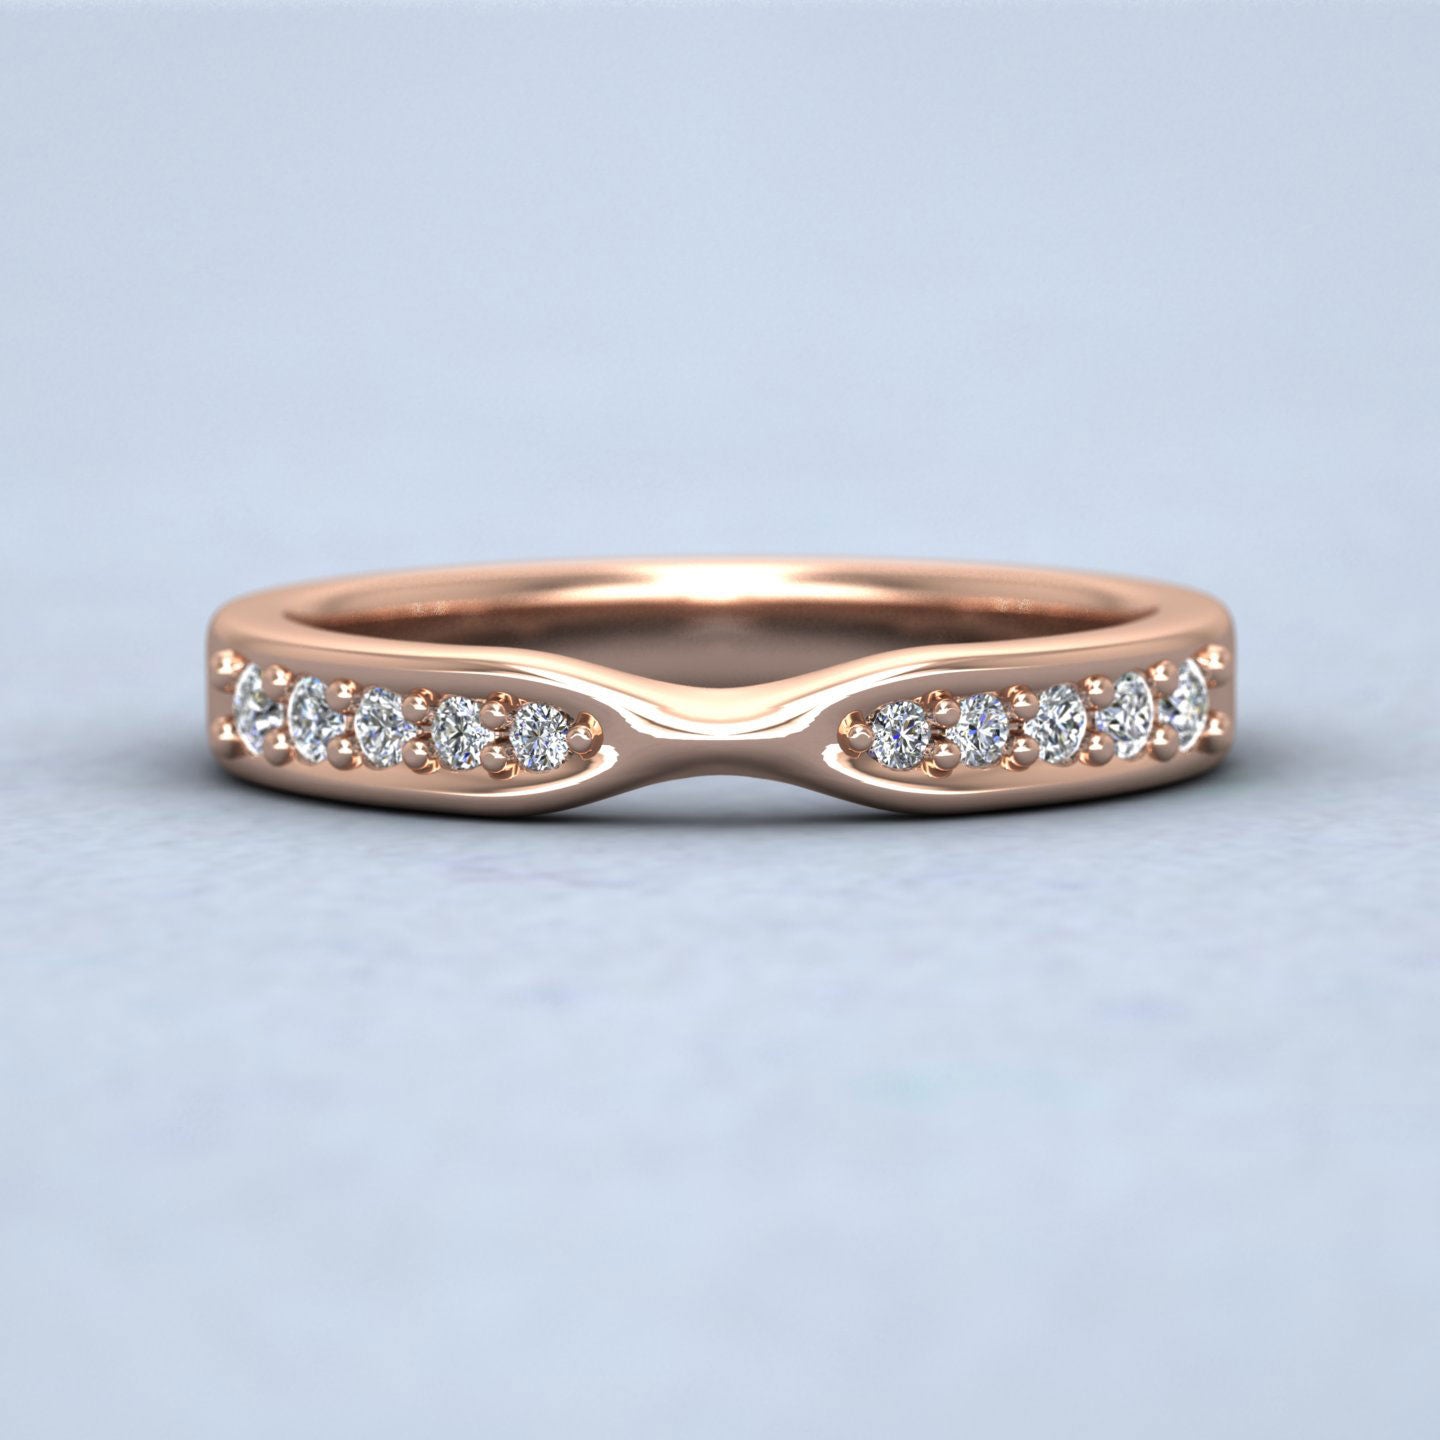 Pinch Design Wedding Ring With Diamonds 9ct Rose Gold 3mm Wedding Ring